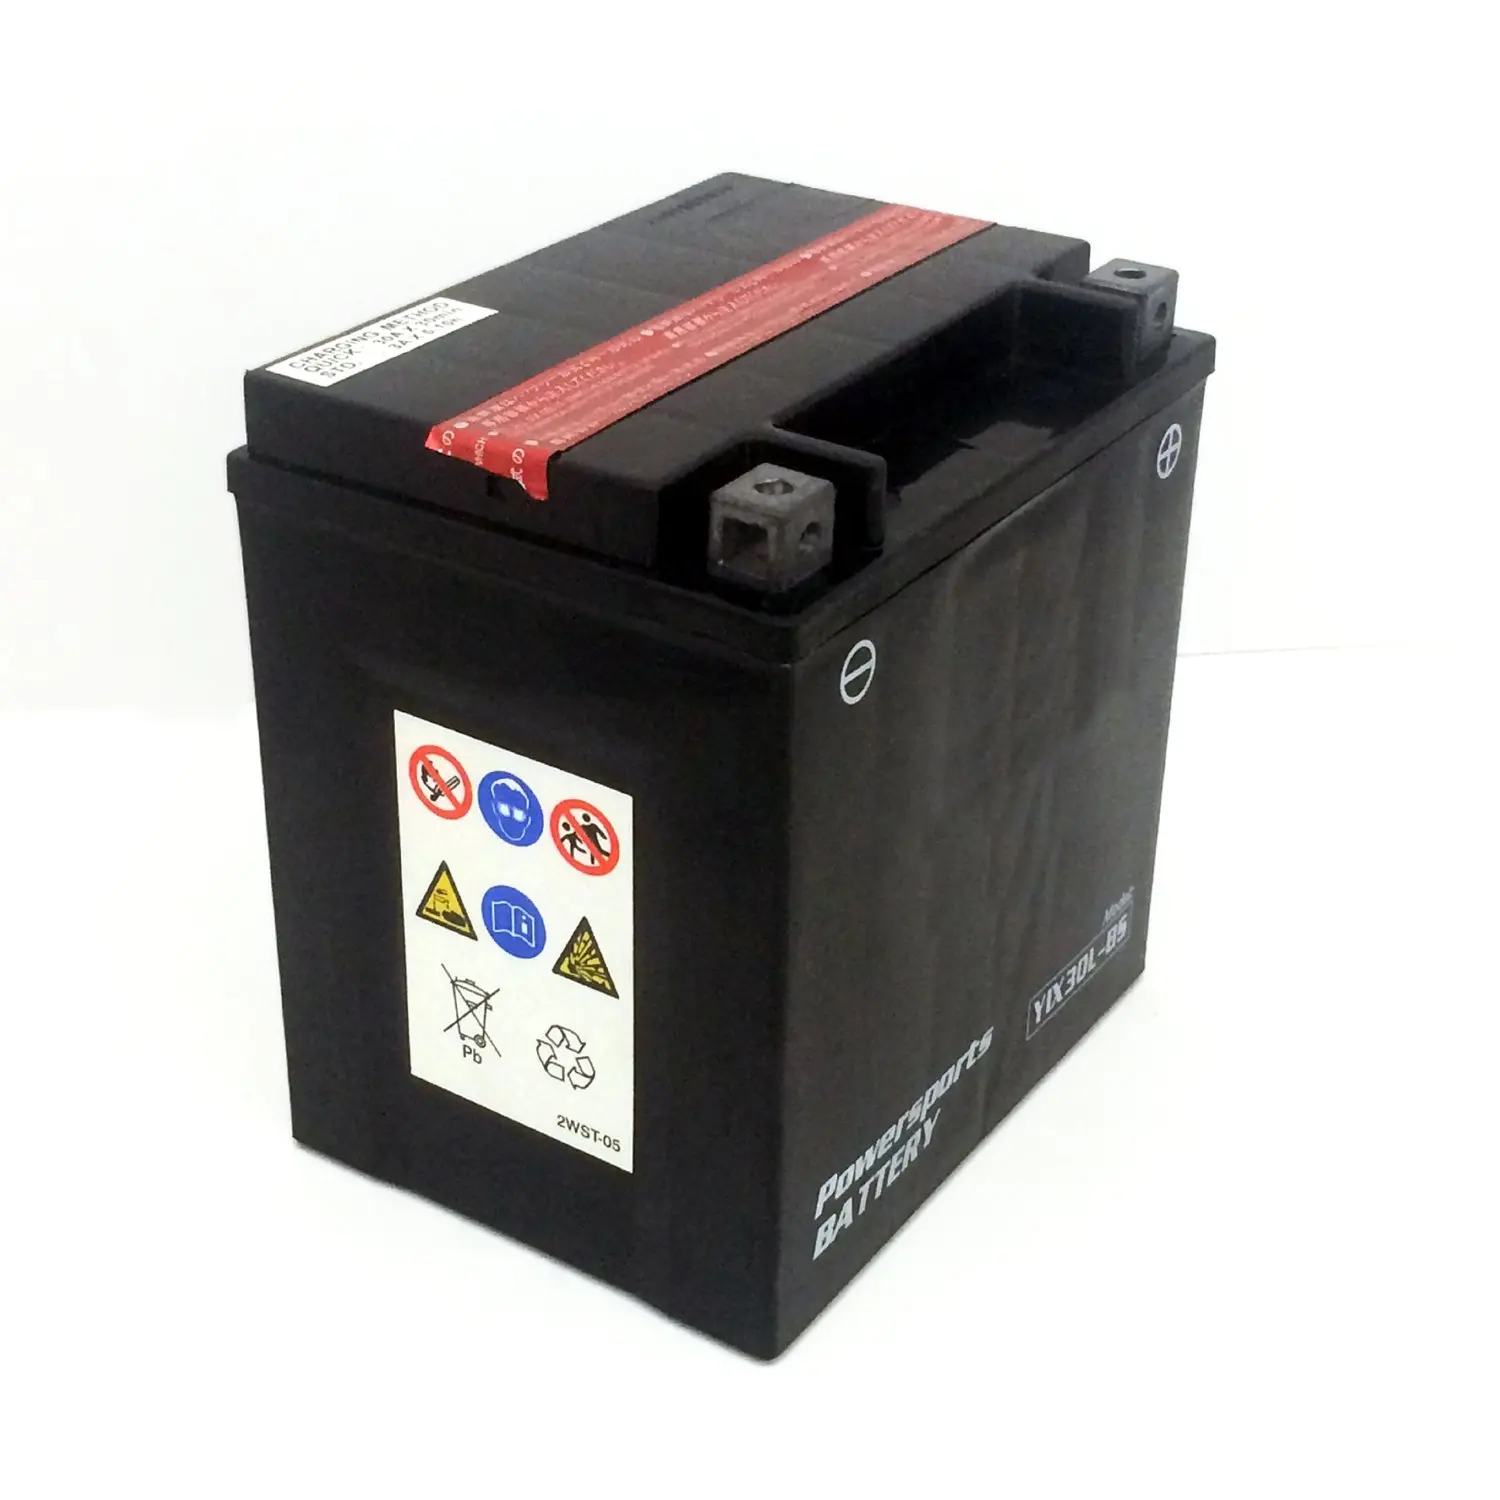 Polaris Sportsman EFI 500 Battery Replacement (2006-2010 